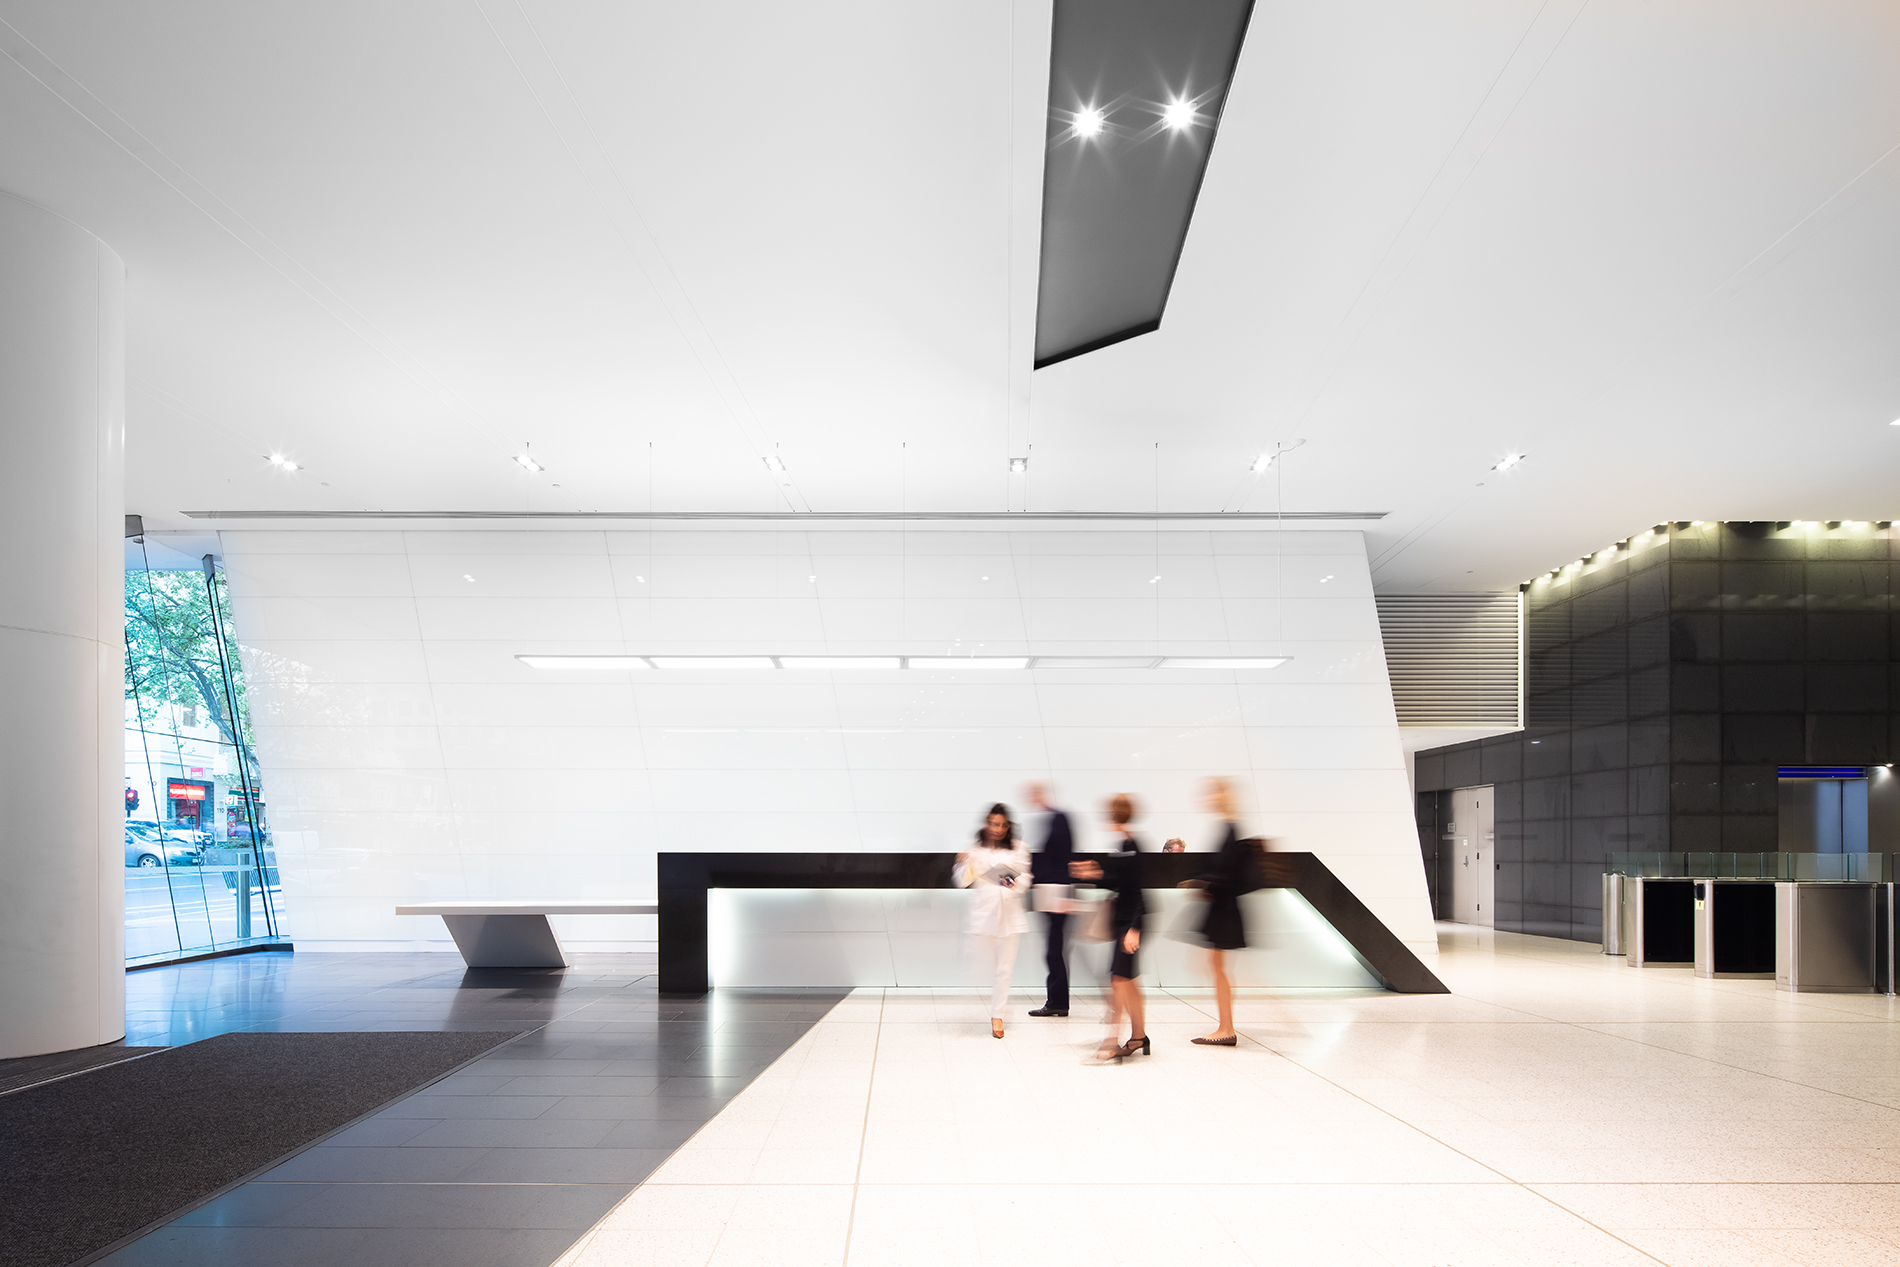 A lobby in a modern building